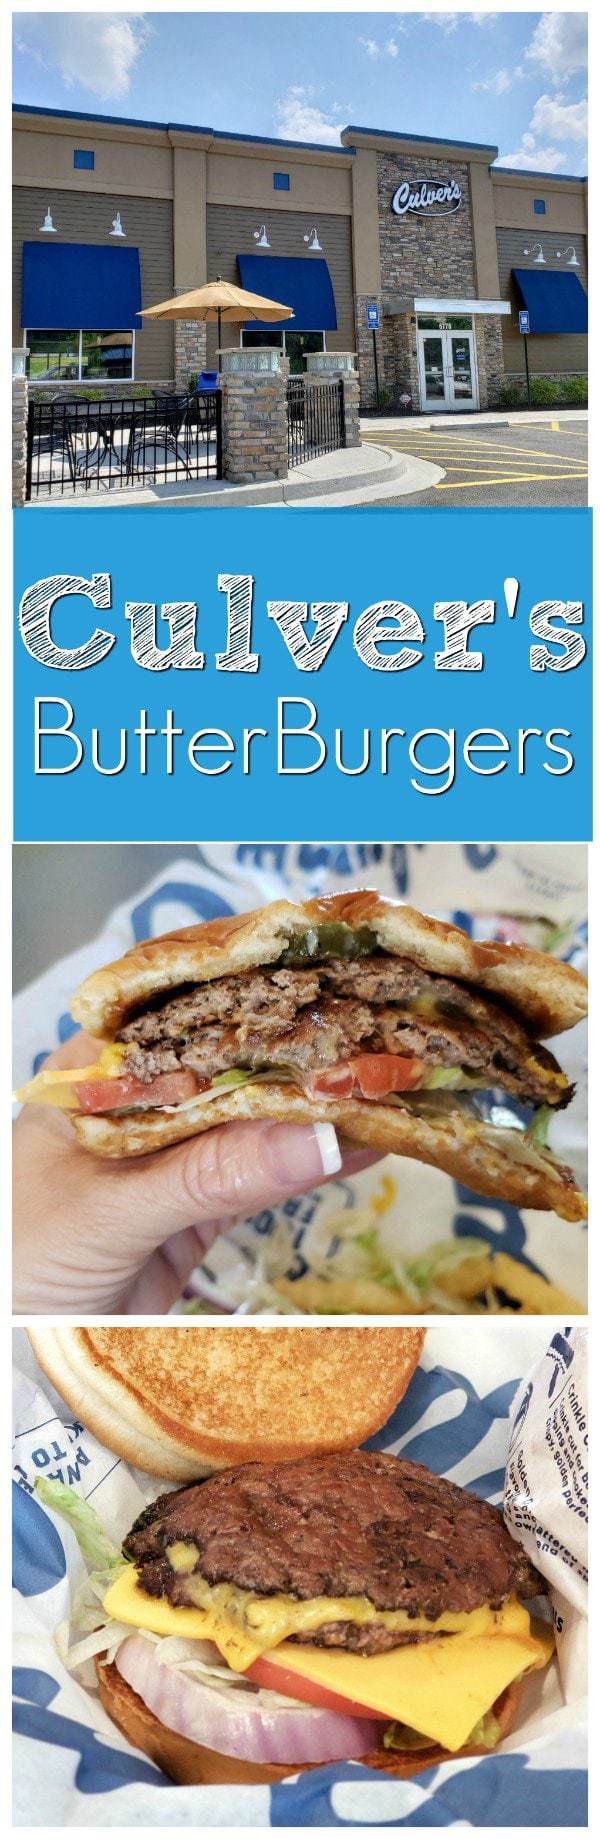 culvers-butterburgers